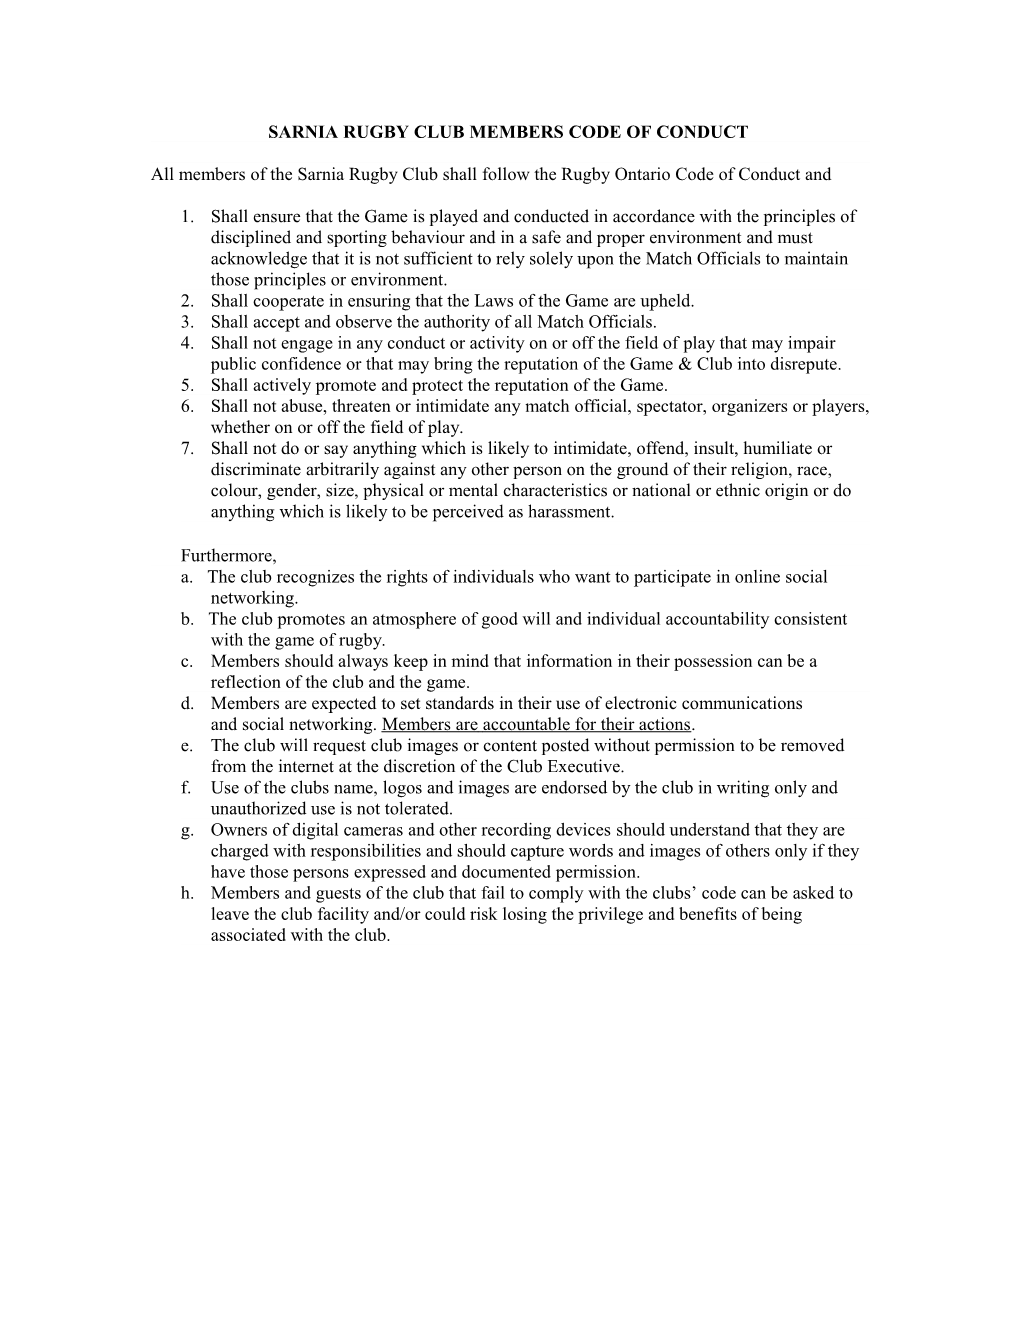 Sarnia Rugby Club Members Code of Conduct